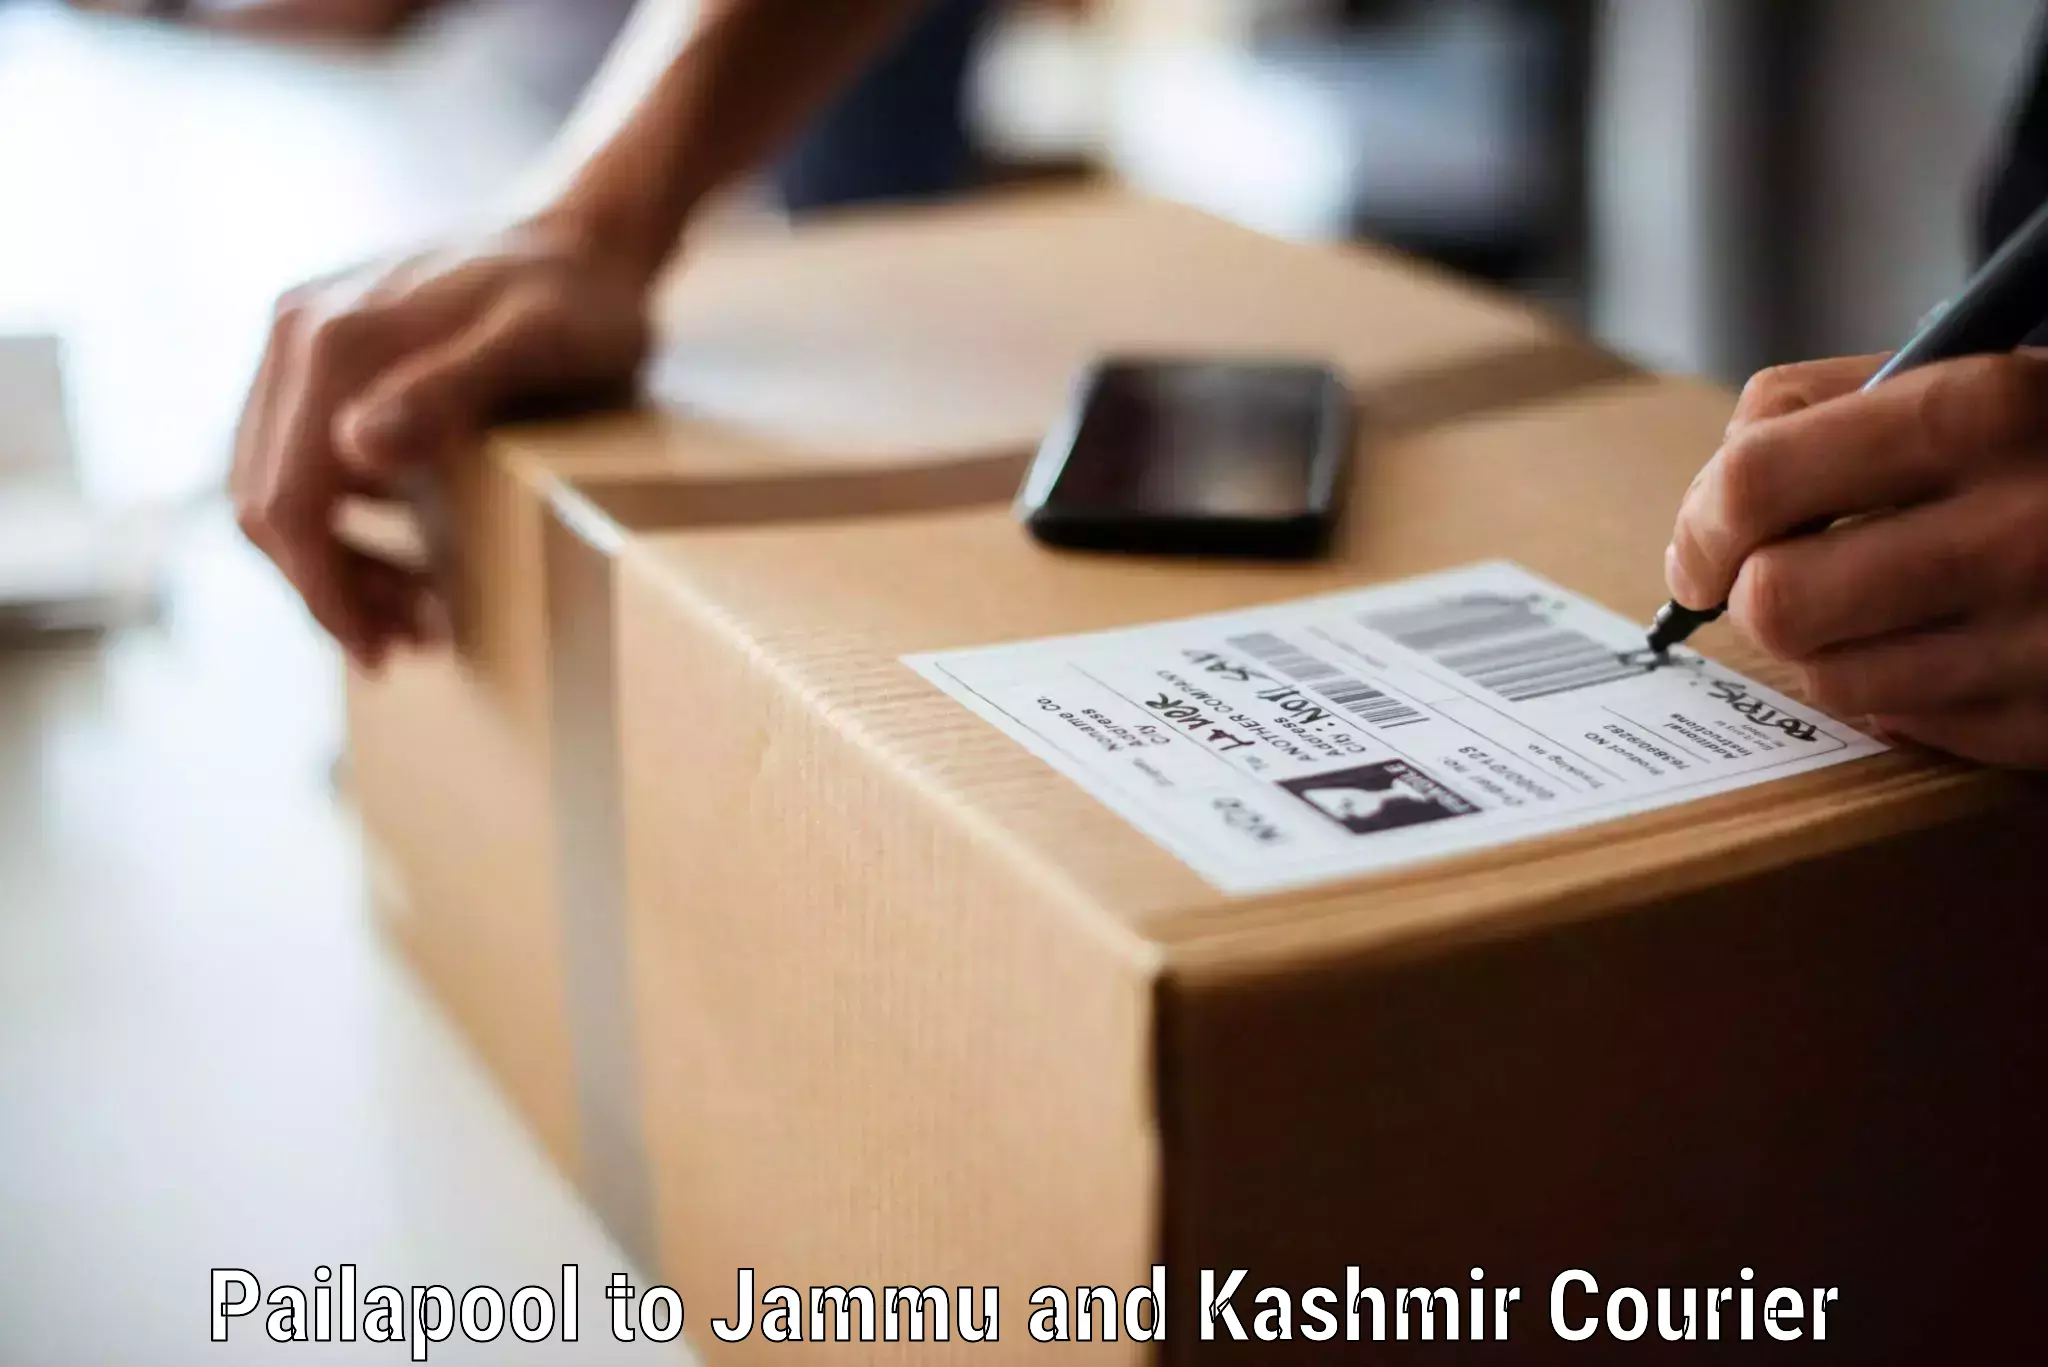 Moving and storage services Pailapool to Srinagar Kashmir